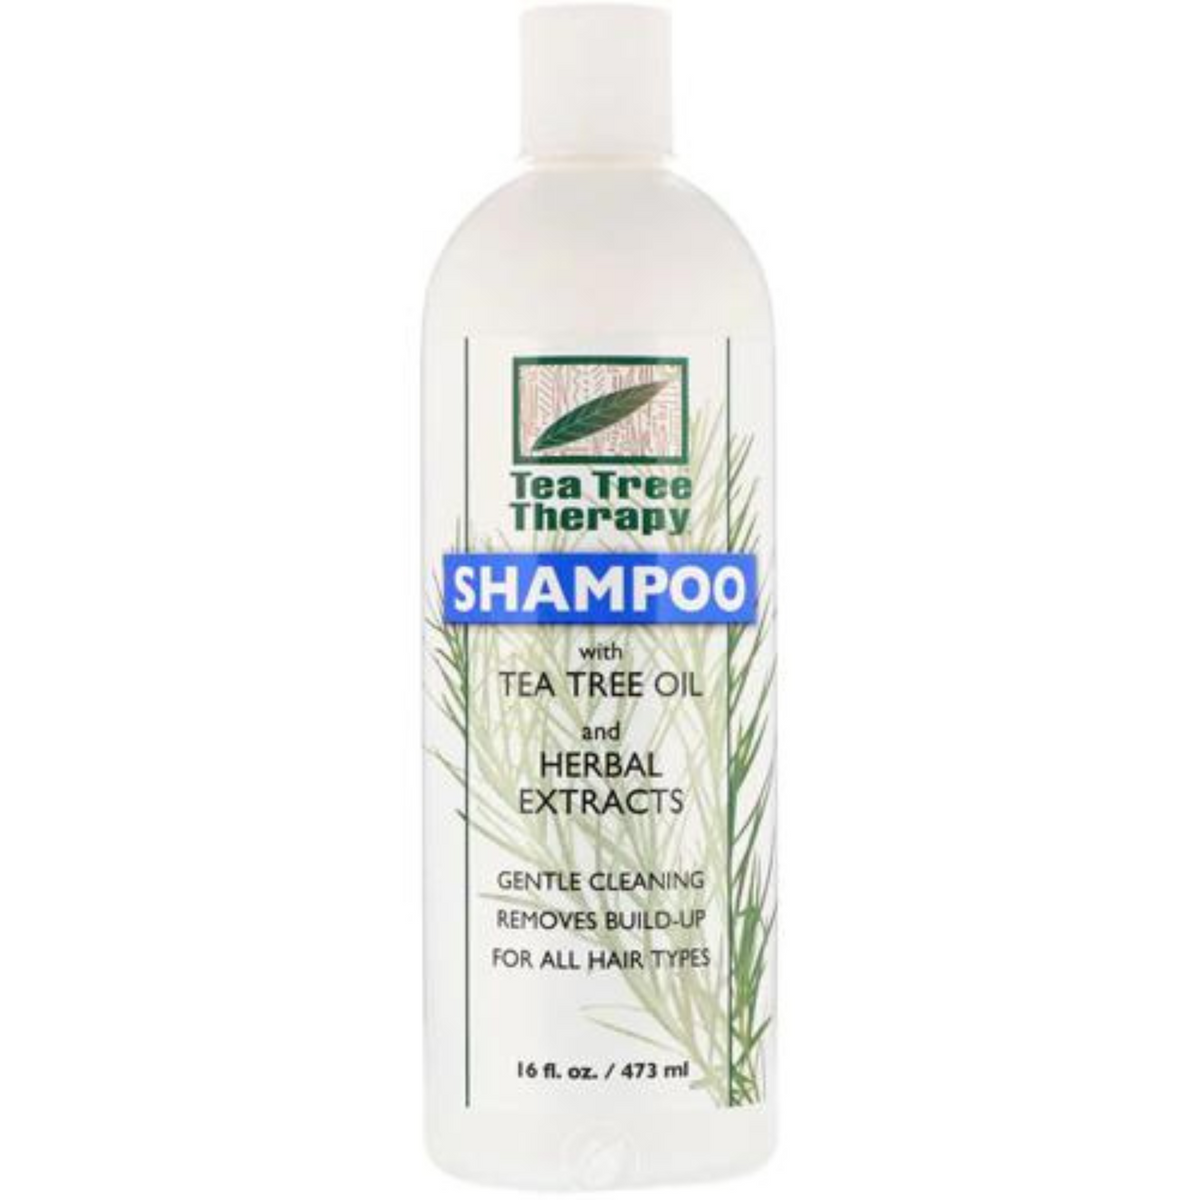 Primary Image of Tea Tree Therapy Shampoo (16 fl oz)